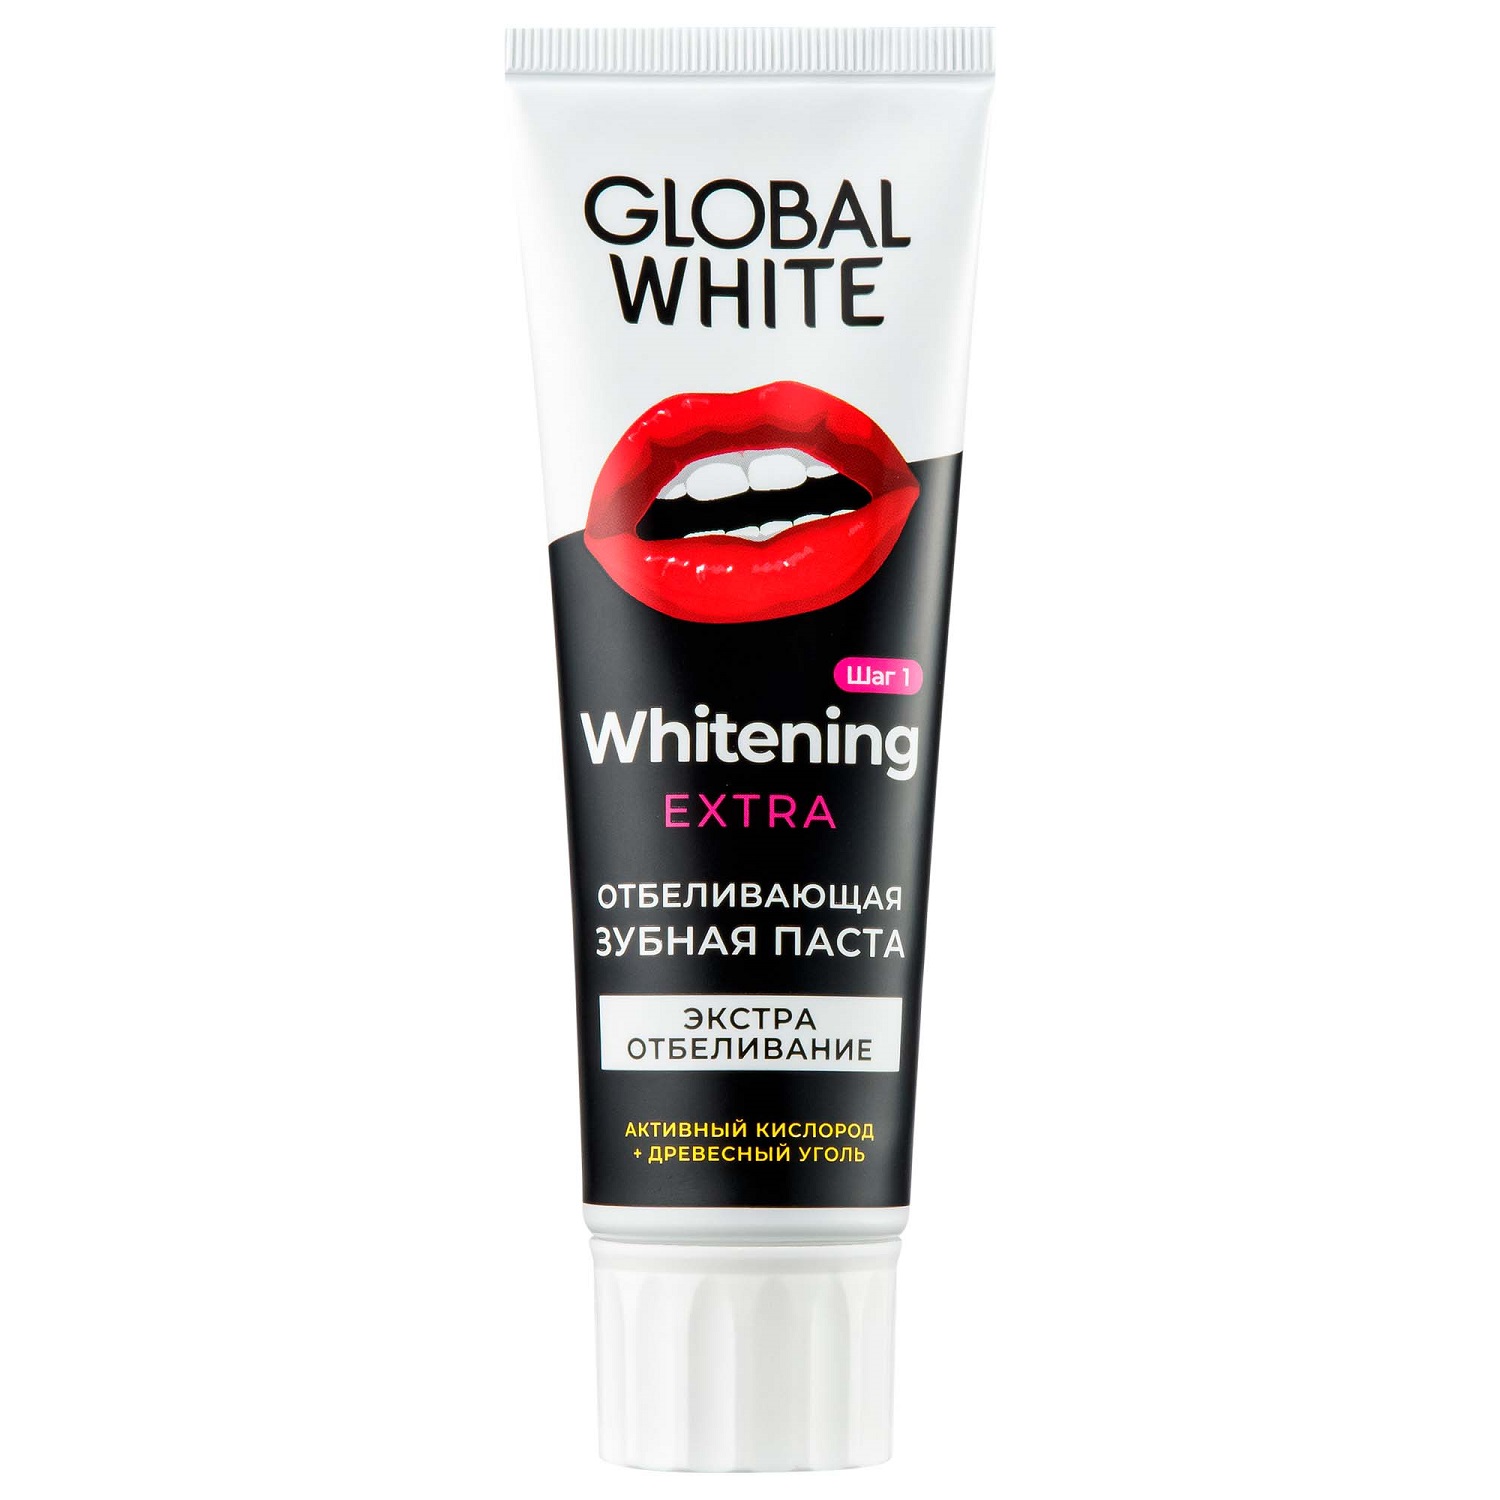 Global White Отбеливающая зубная паста Extra Whitening, 100 г (Global White, Подготовка к отбеливанию) global white реминерализирующая зубная паста 100 г global white подготовка к отбеливанию